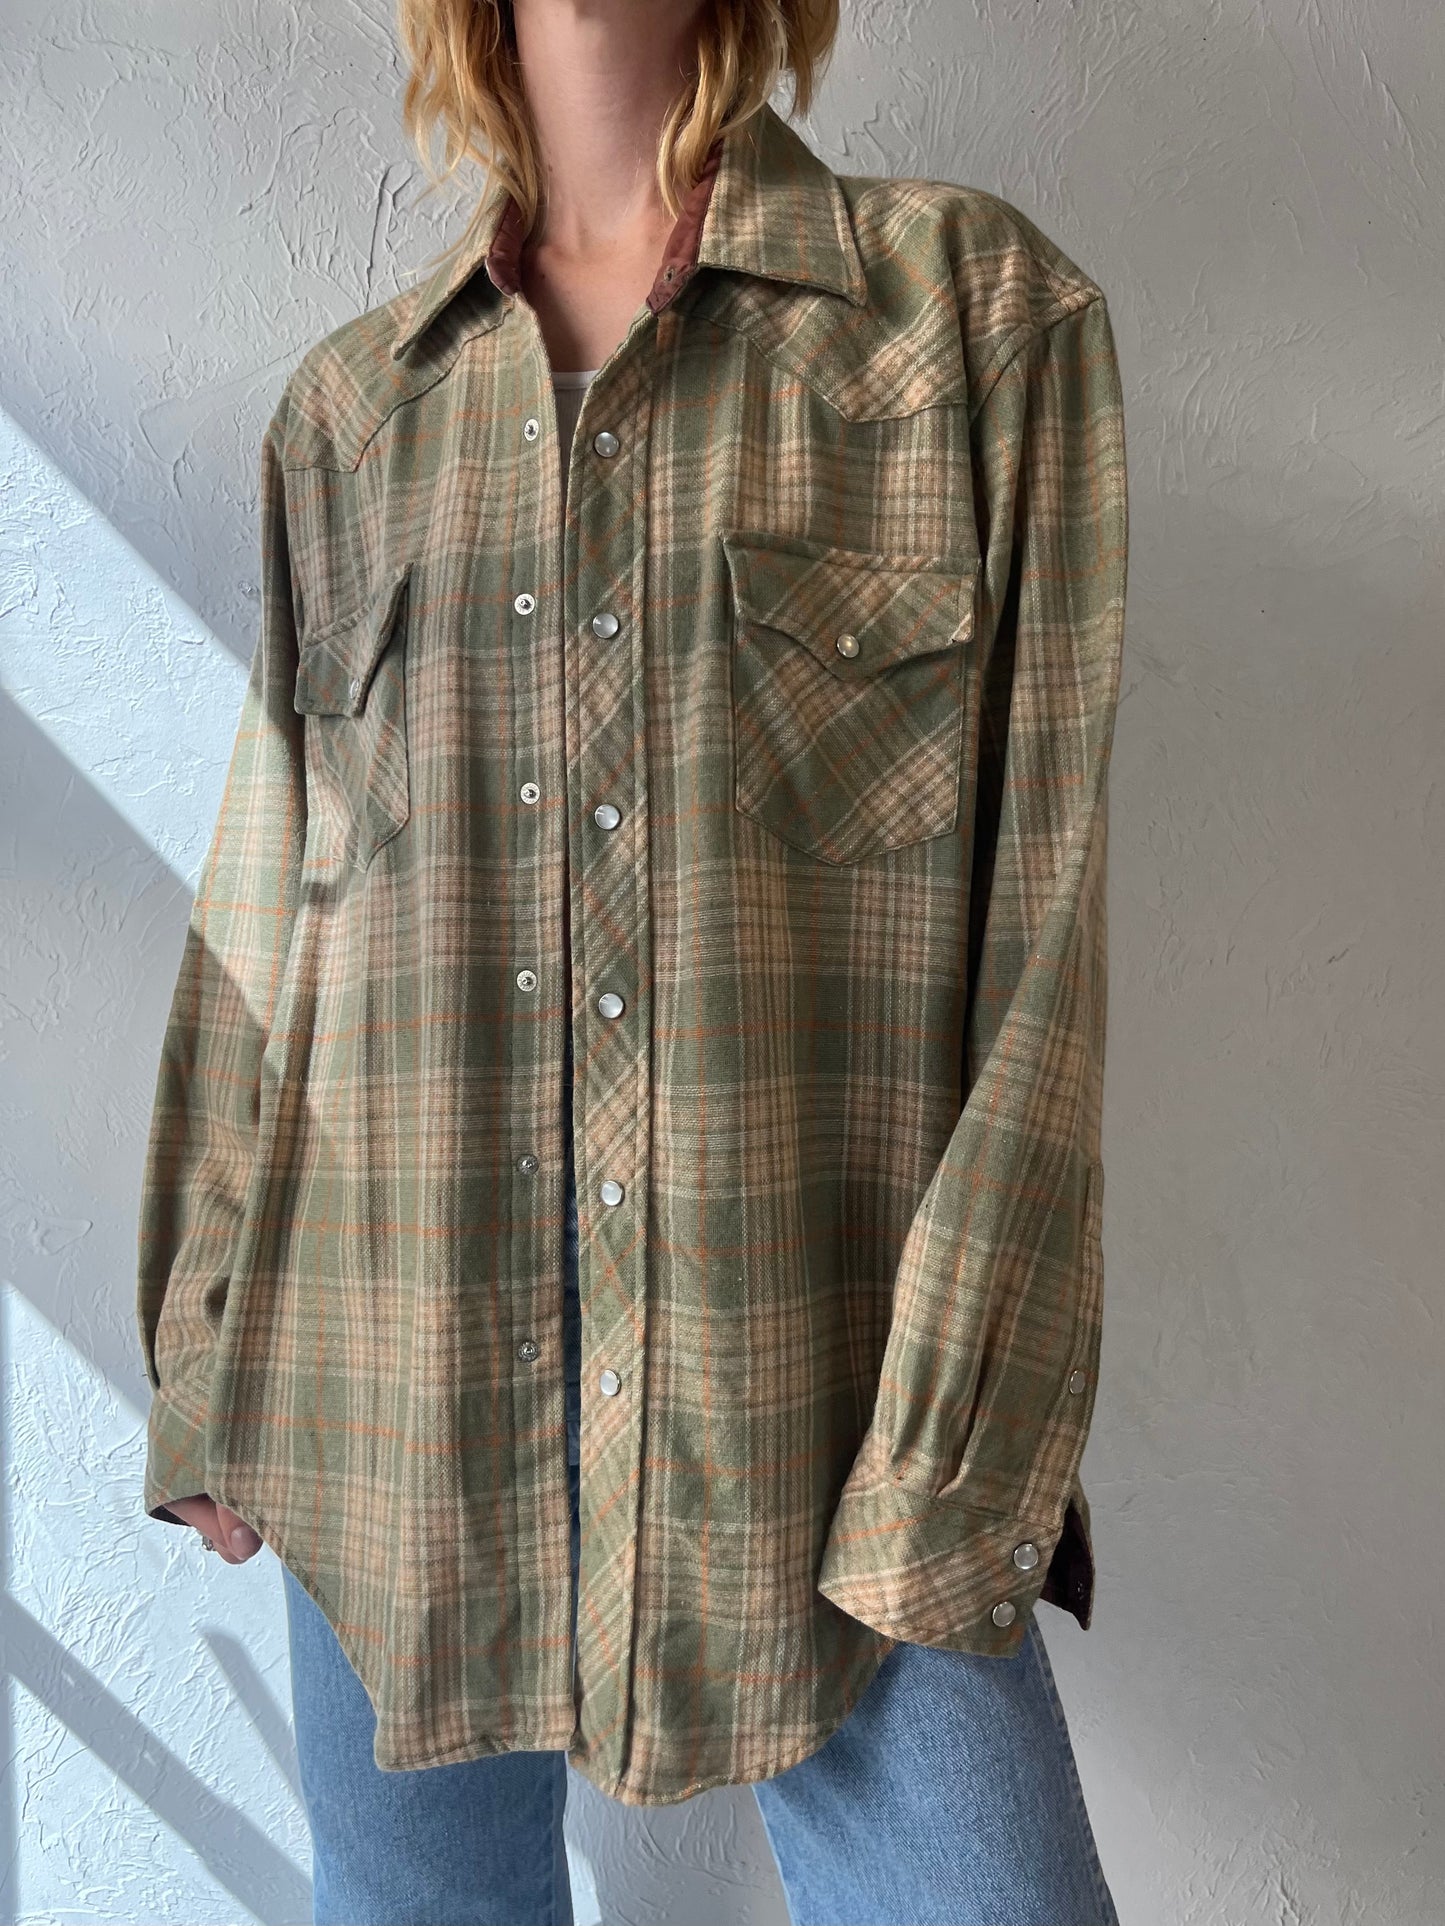 90s 'Kmart' Green Plaid Snap Up Shirt / Large